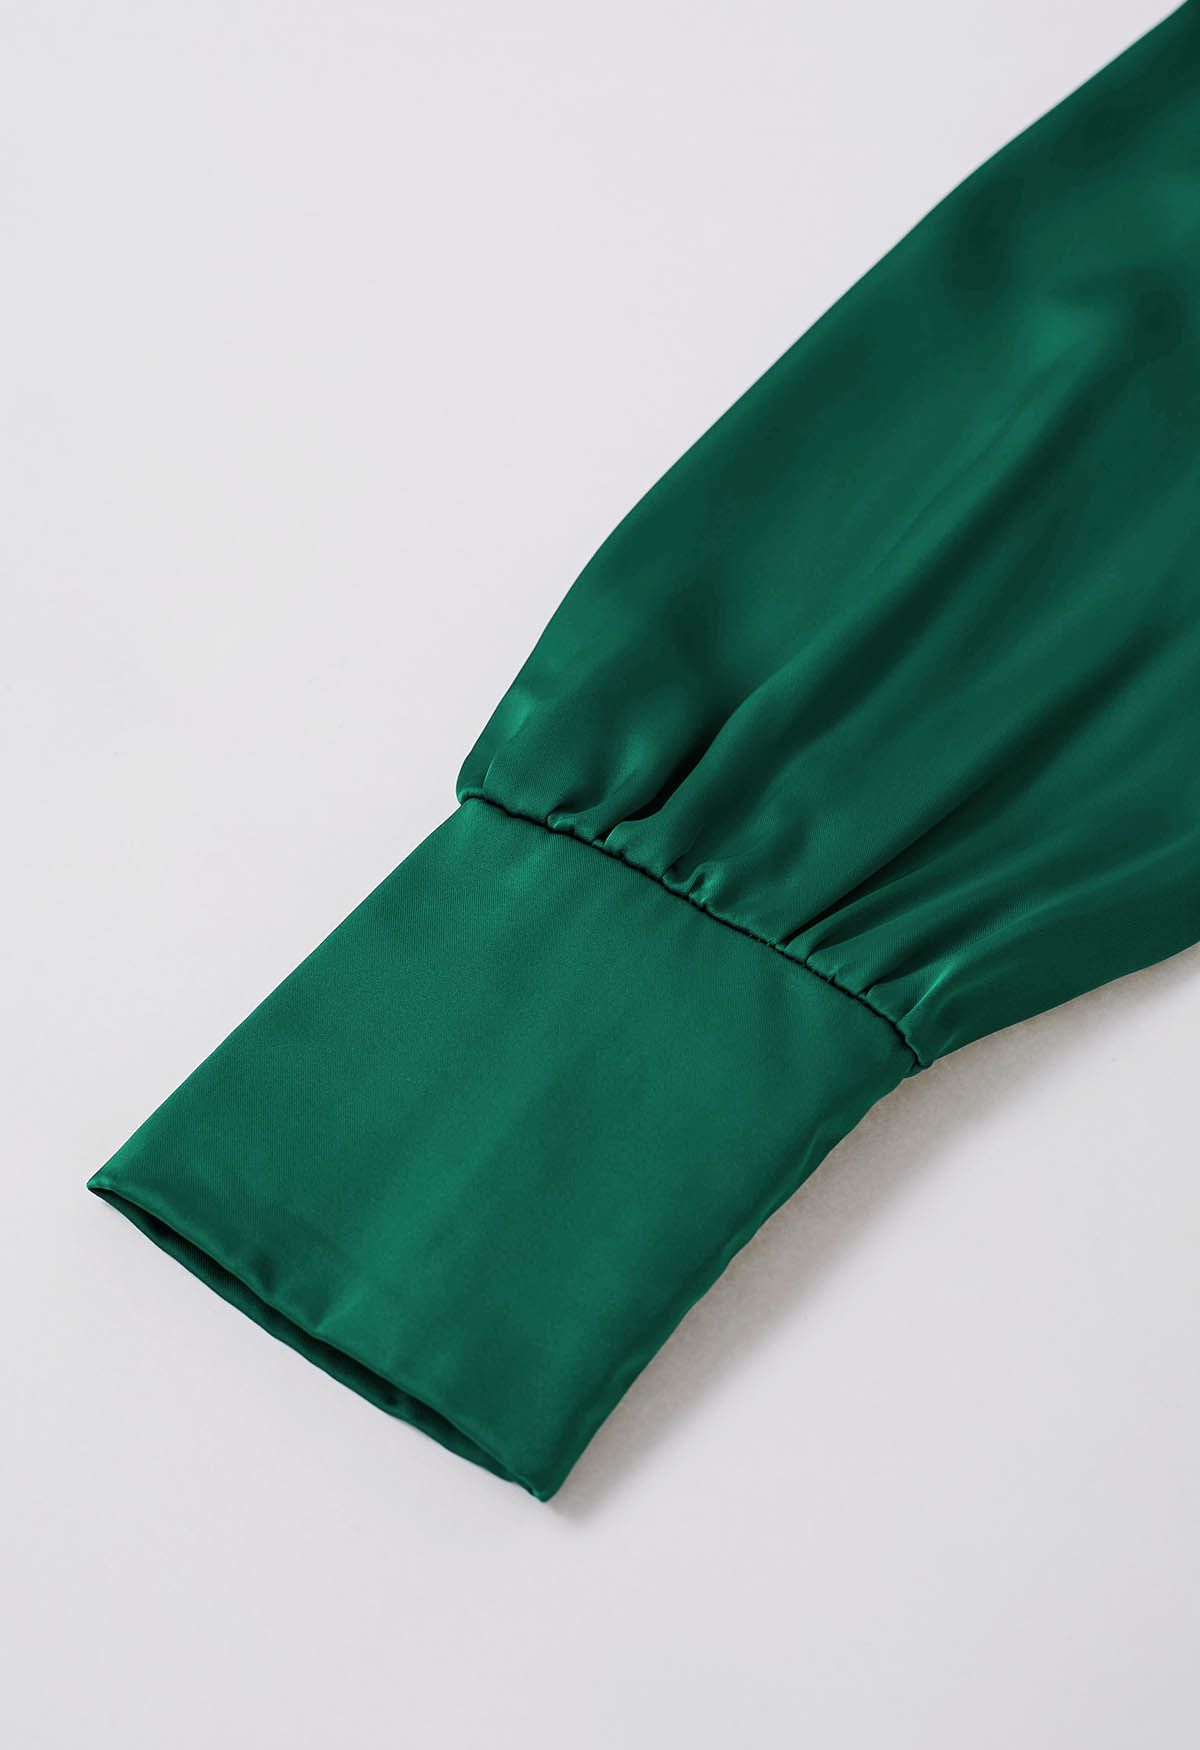 Shine Bright High Neck Tulle Maxi Dress in Emerald